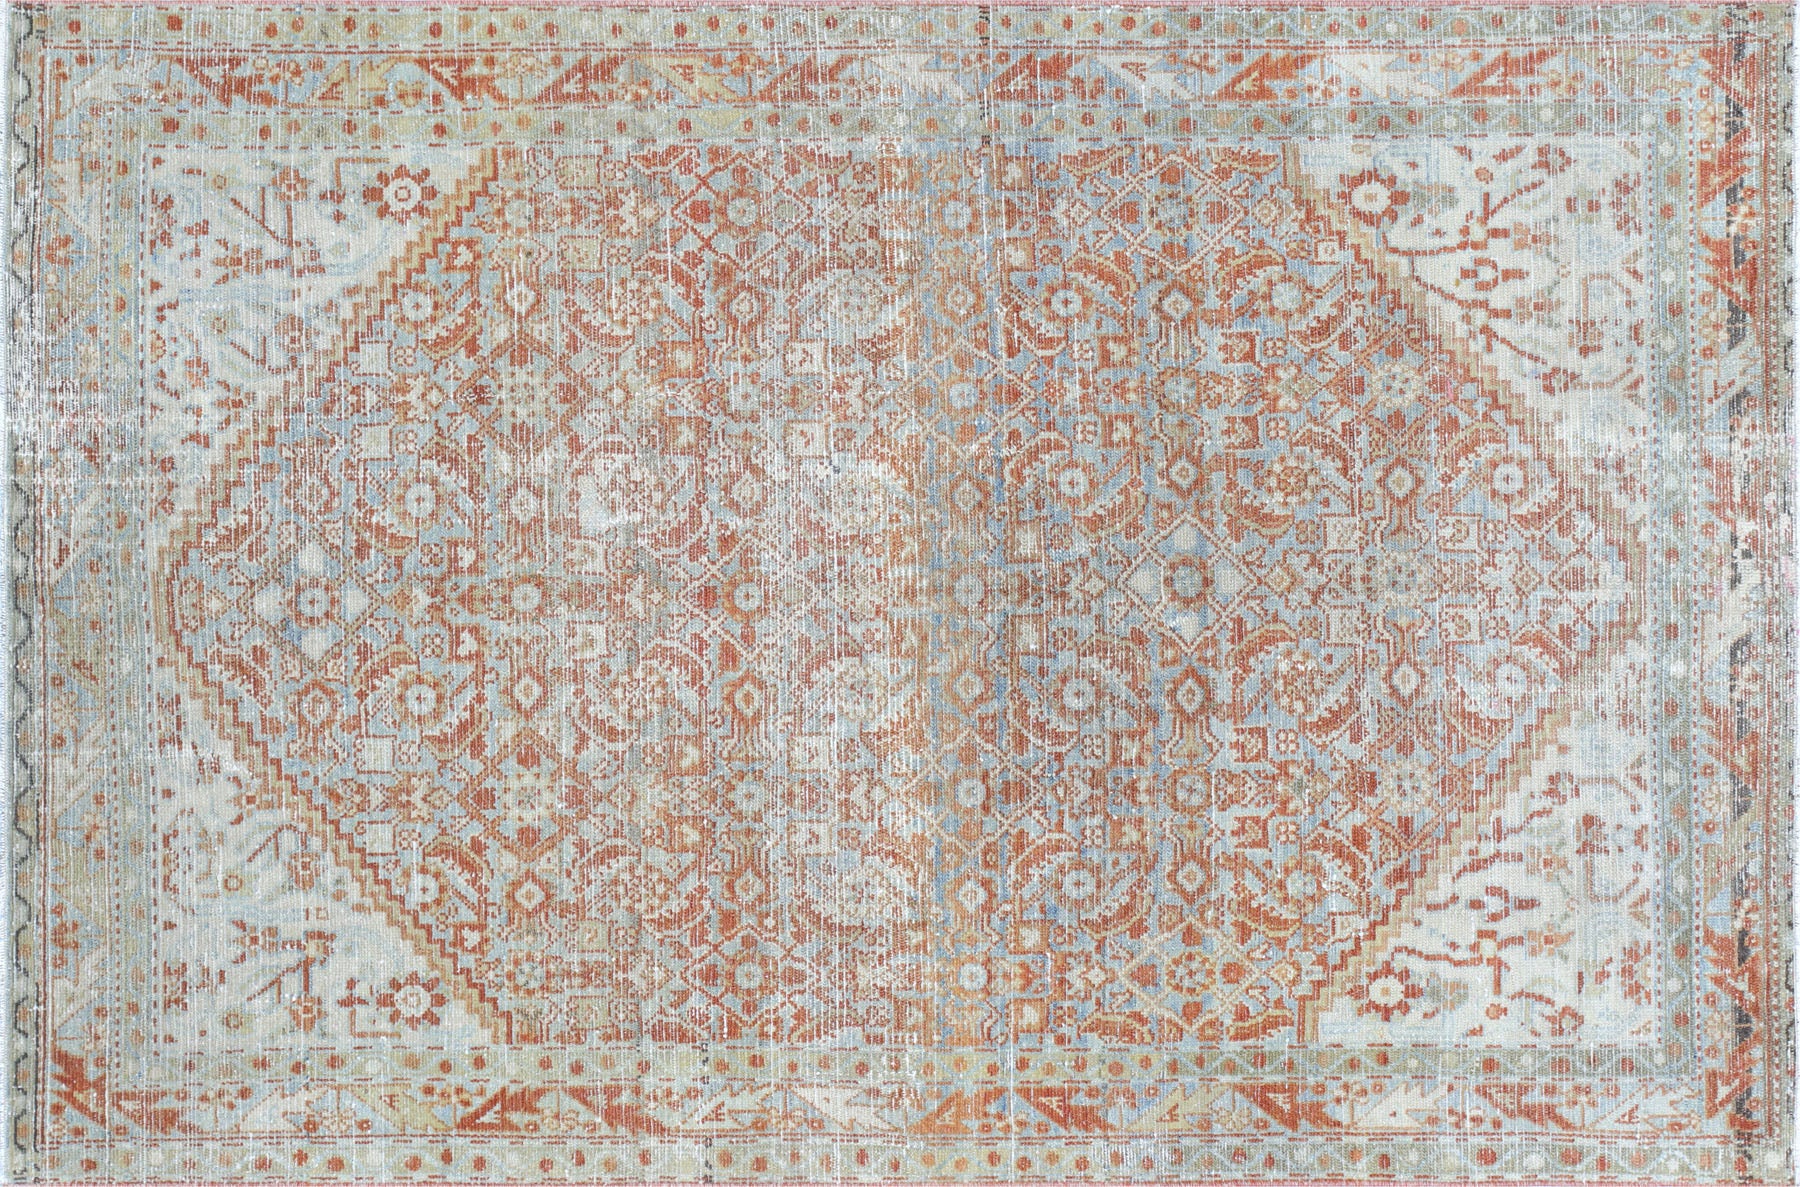 Antique Persian Melayer Carpet - 4'3" x 6'6"